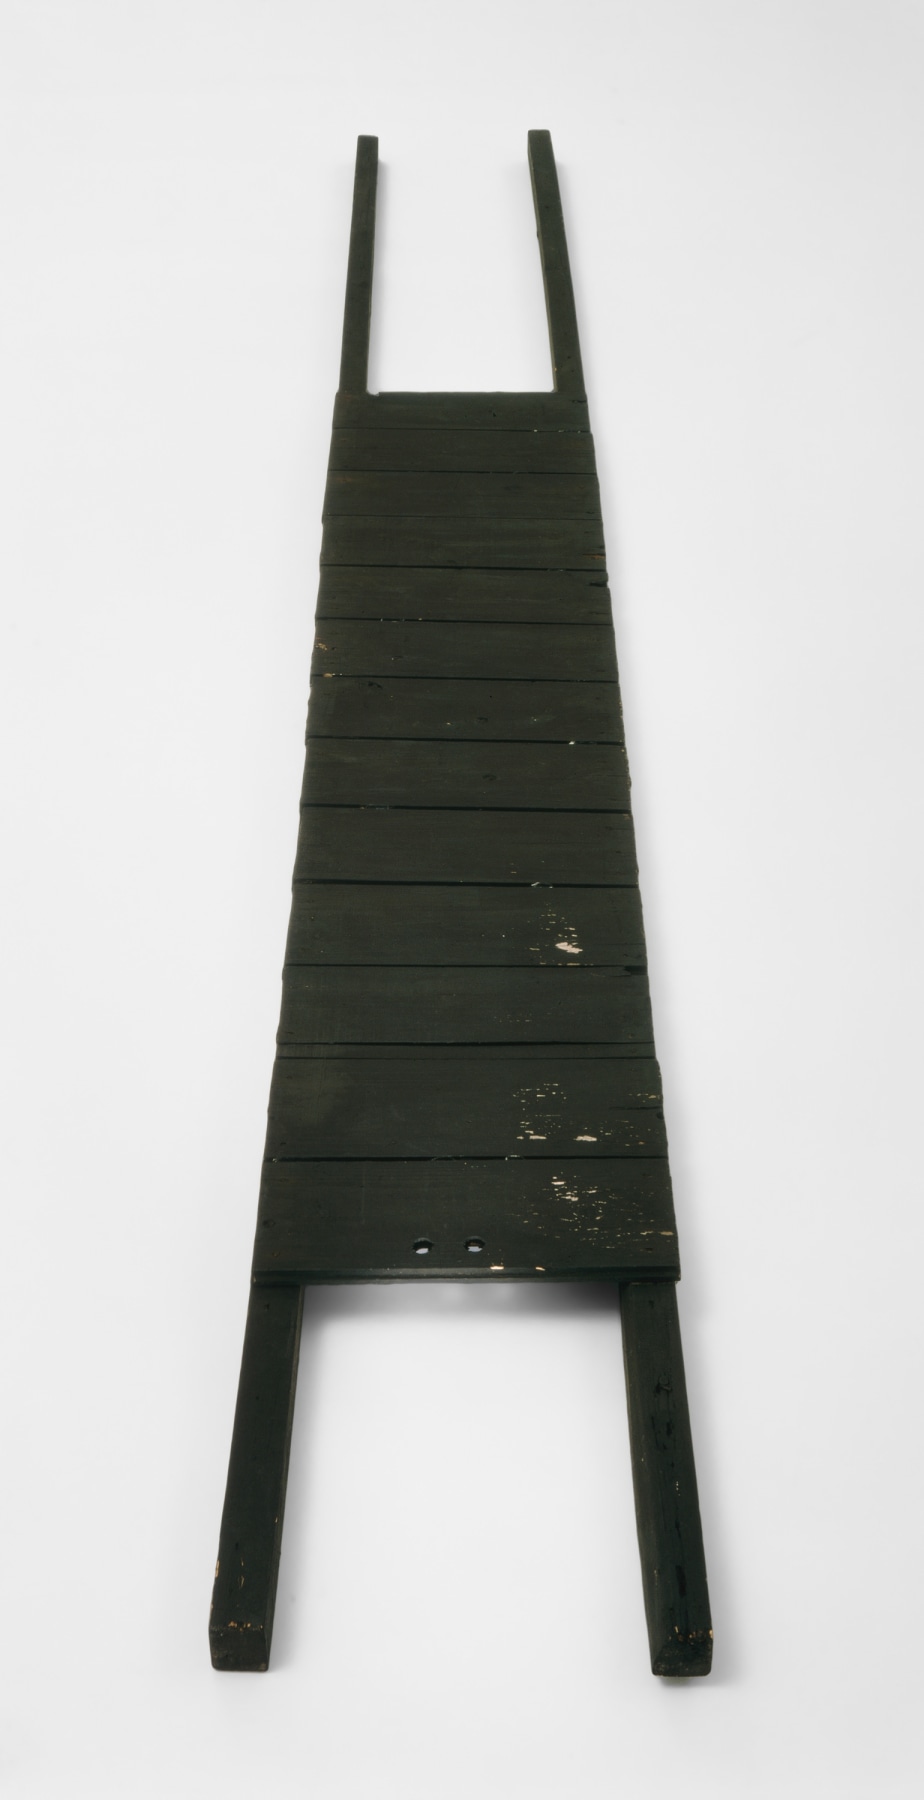 James Lee Byars

&amp;ldquo;Untitled (Black Figure)&amp;rdquo;, ca. 1959

Painted wood

138 x 16 x 2 3/4 inches

350.5 x 40.5 x 7 cm

JB 1/Q